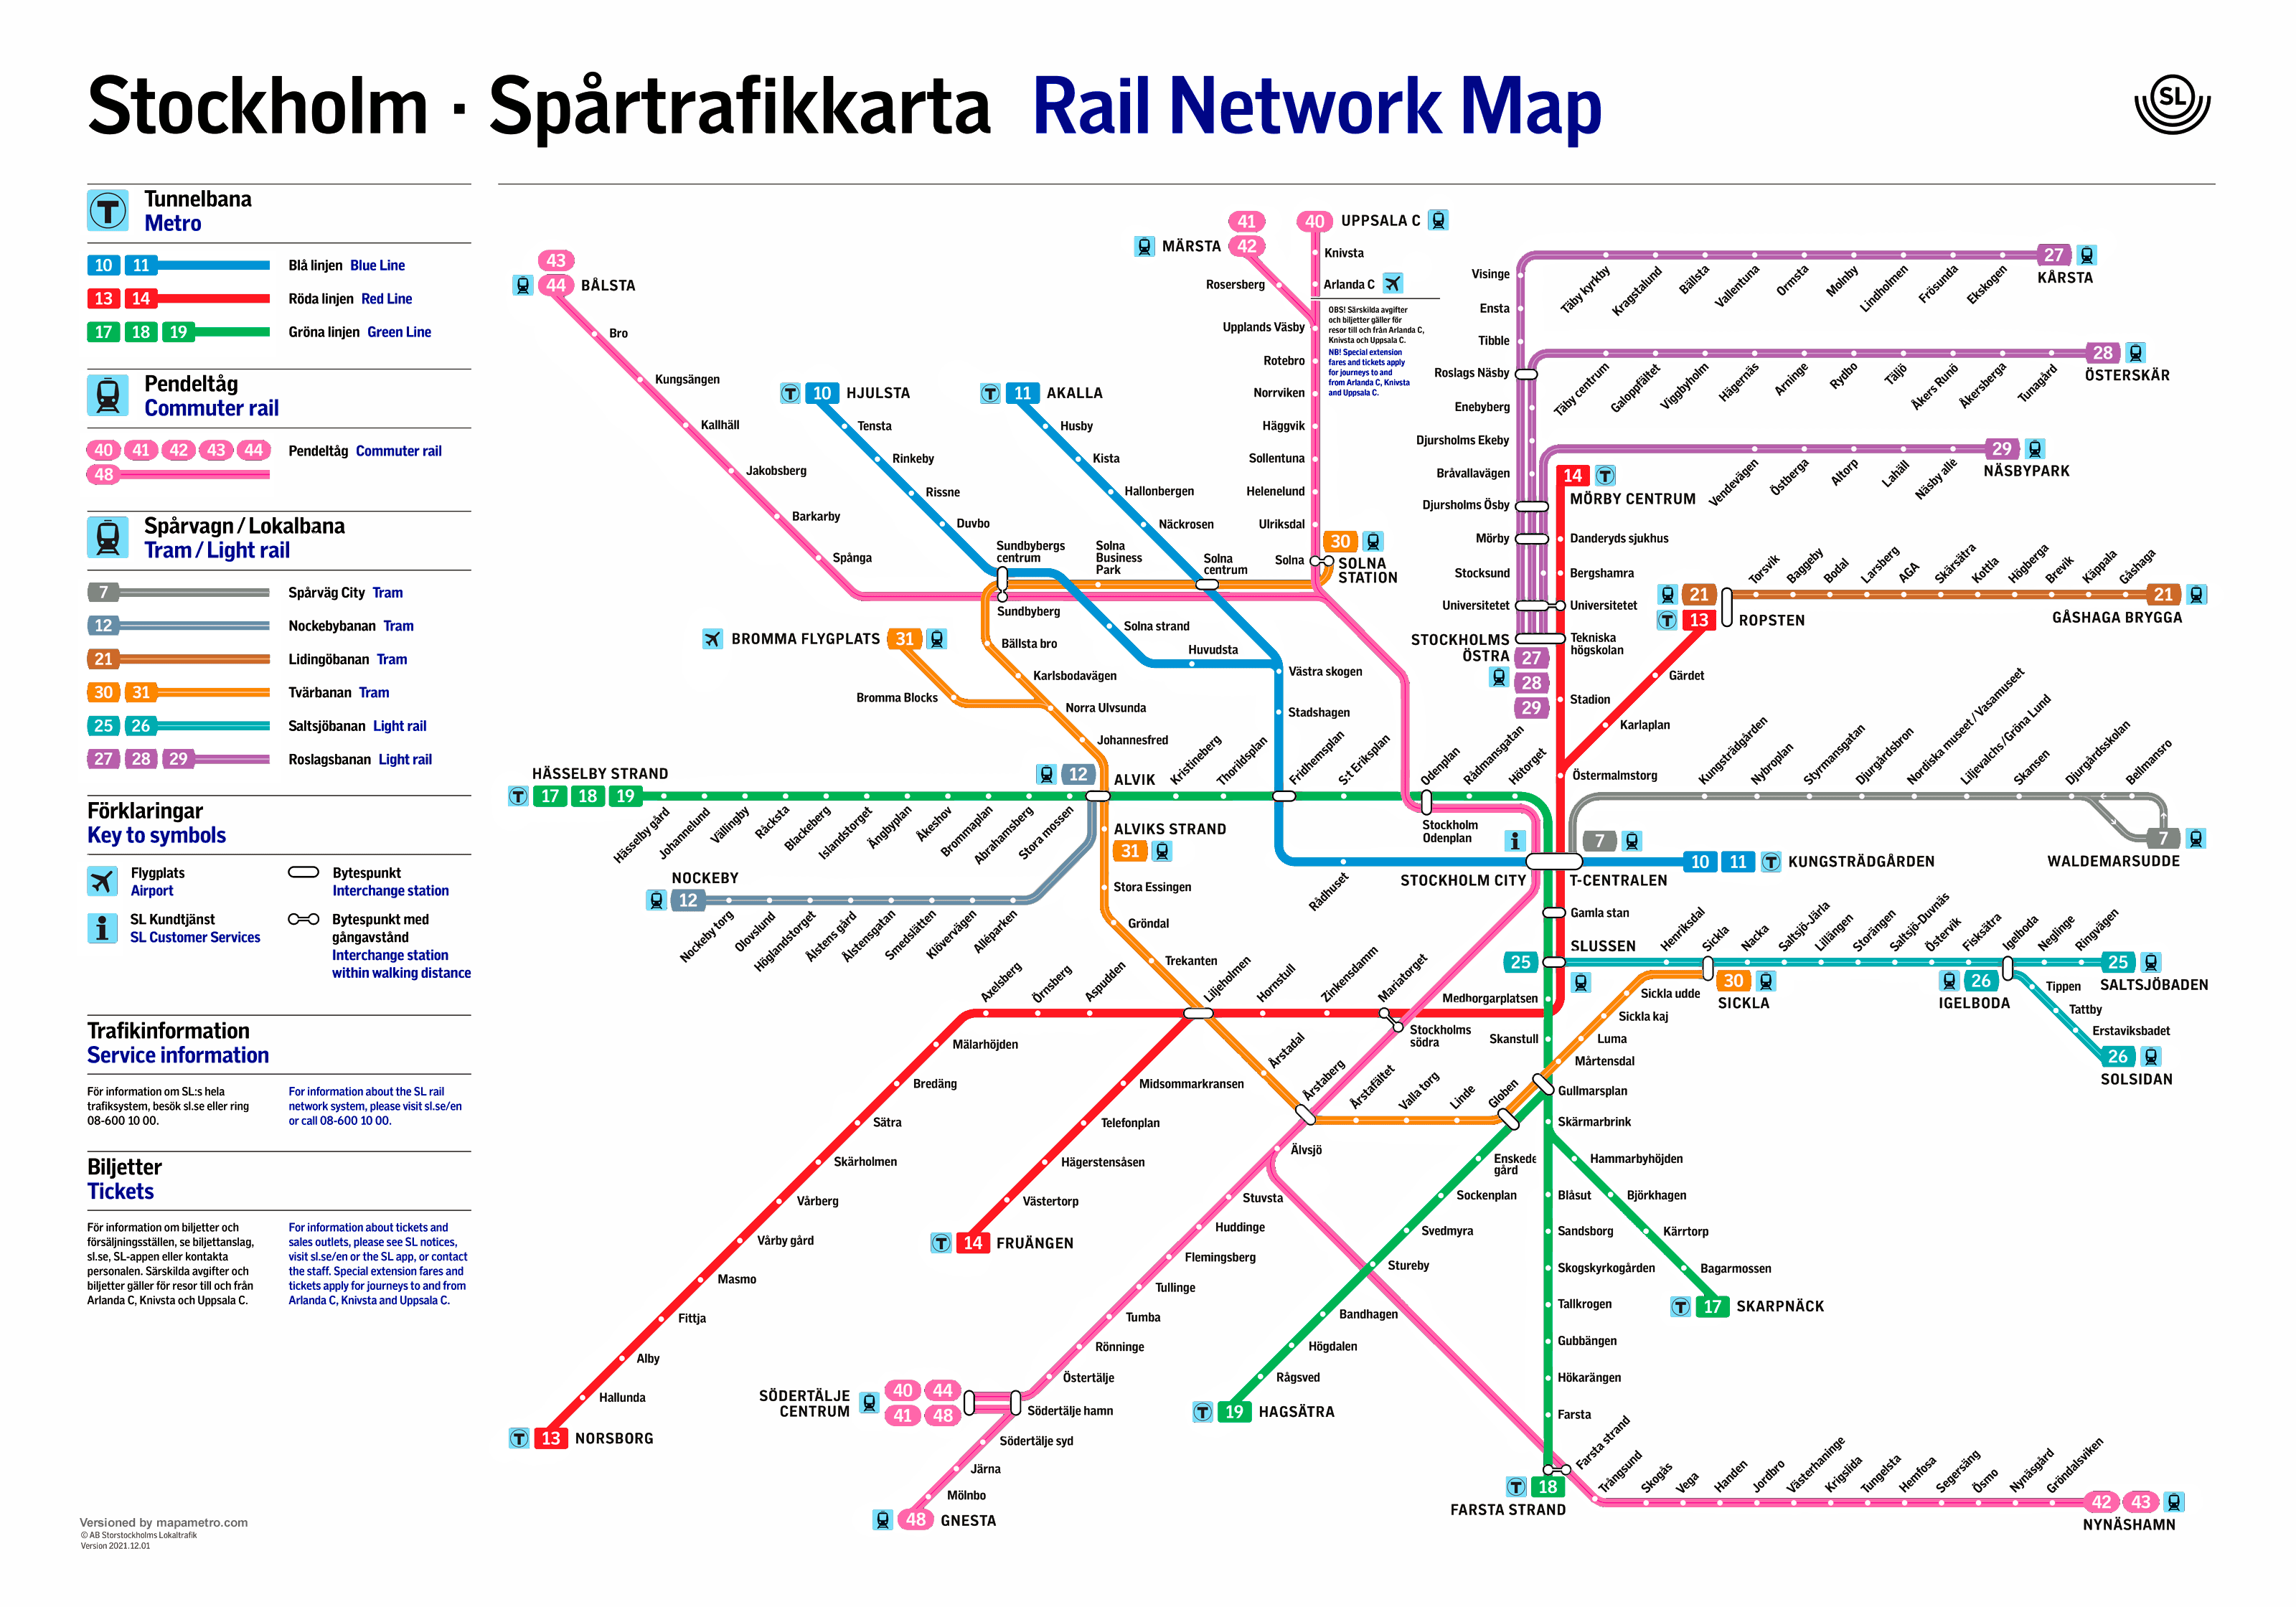 Схема метро Стокгольма.